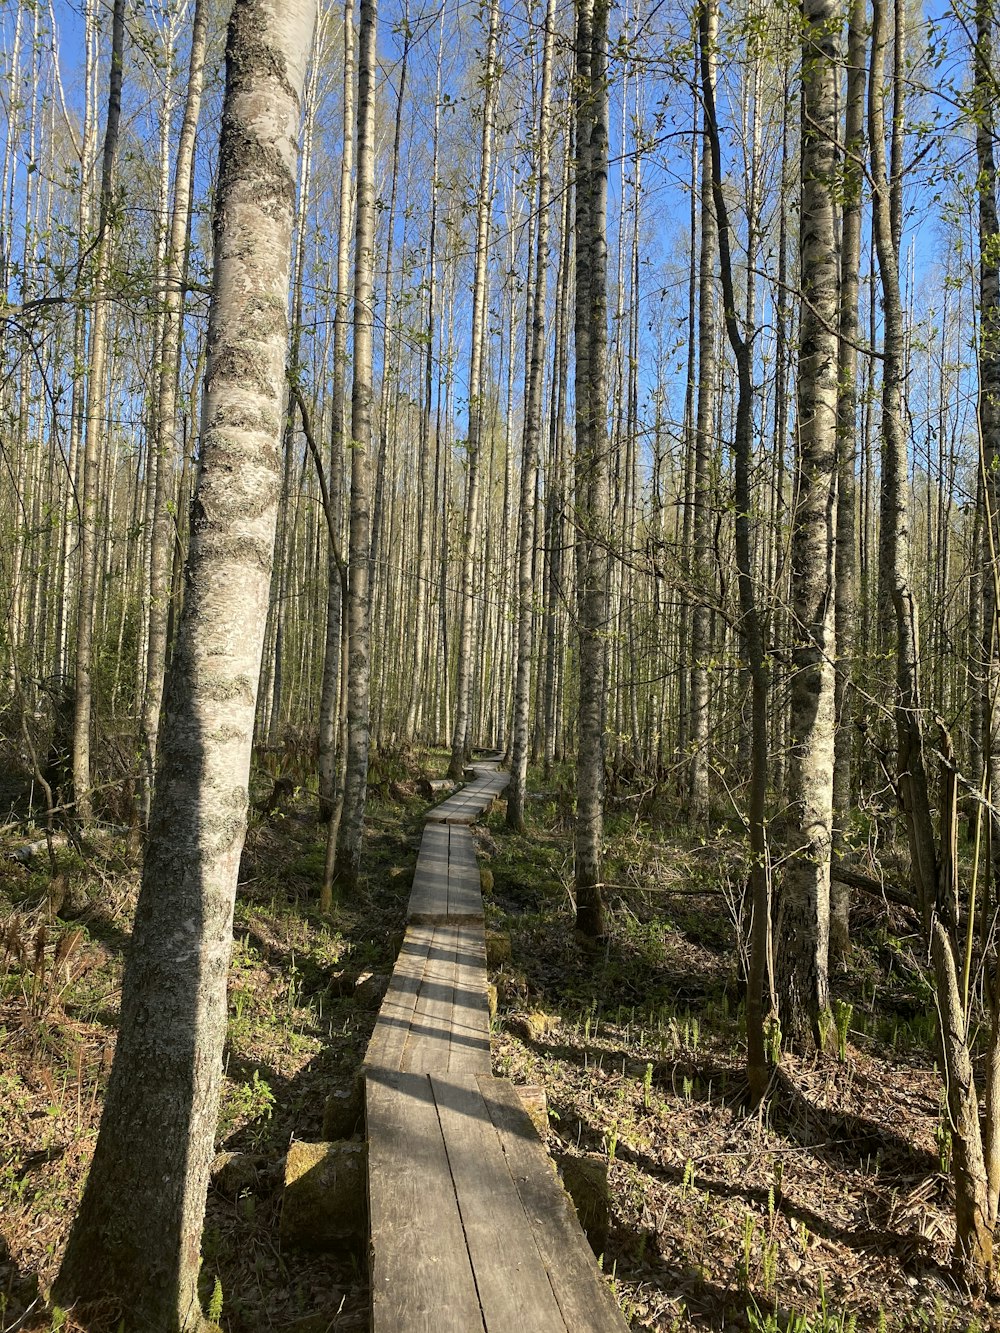 brown wooden pathway in the woods